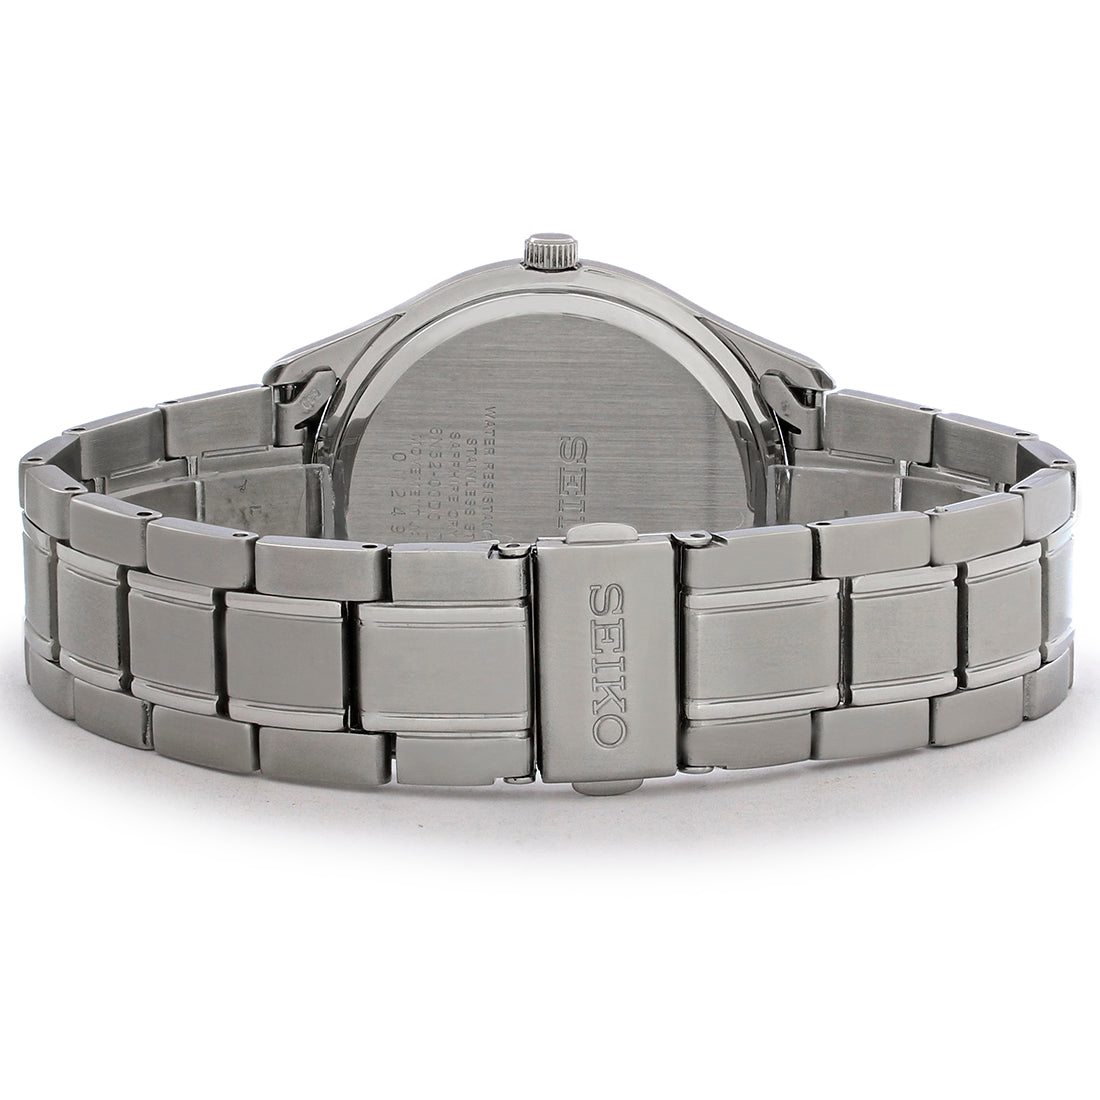 Seiko Essentials Mens Stainless Steel Blue Dial Quartz Watch SUR419